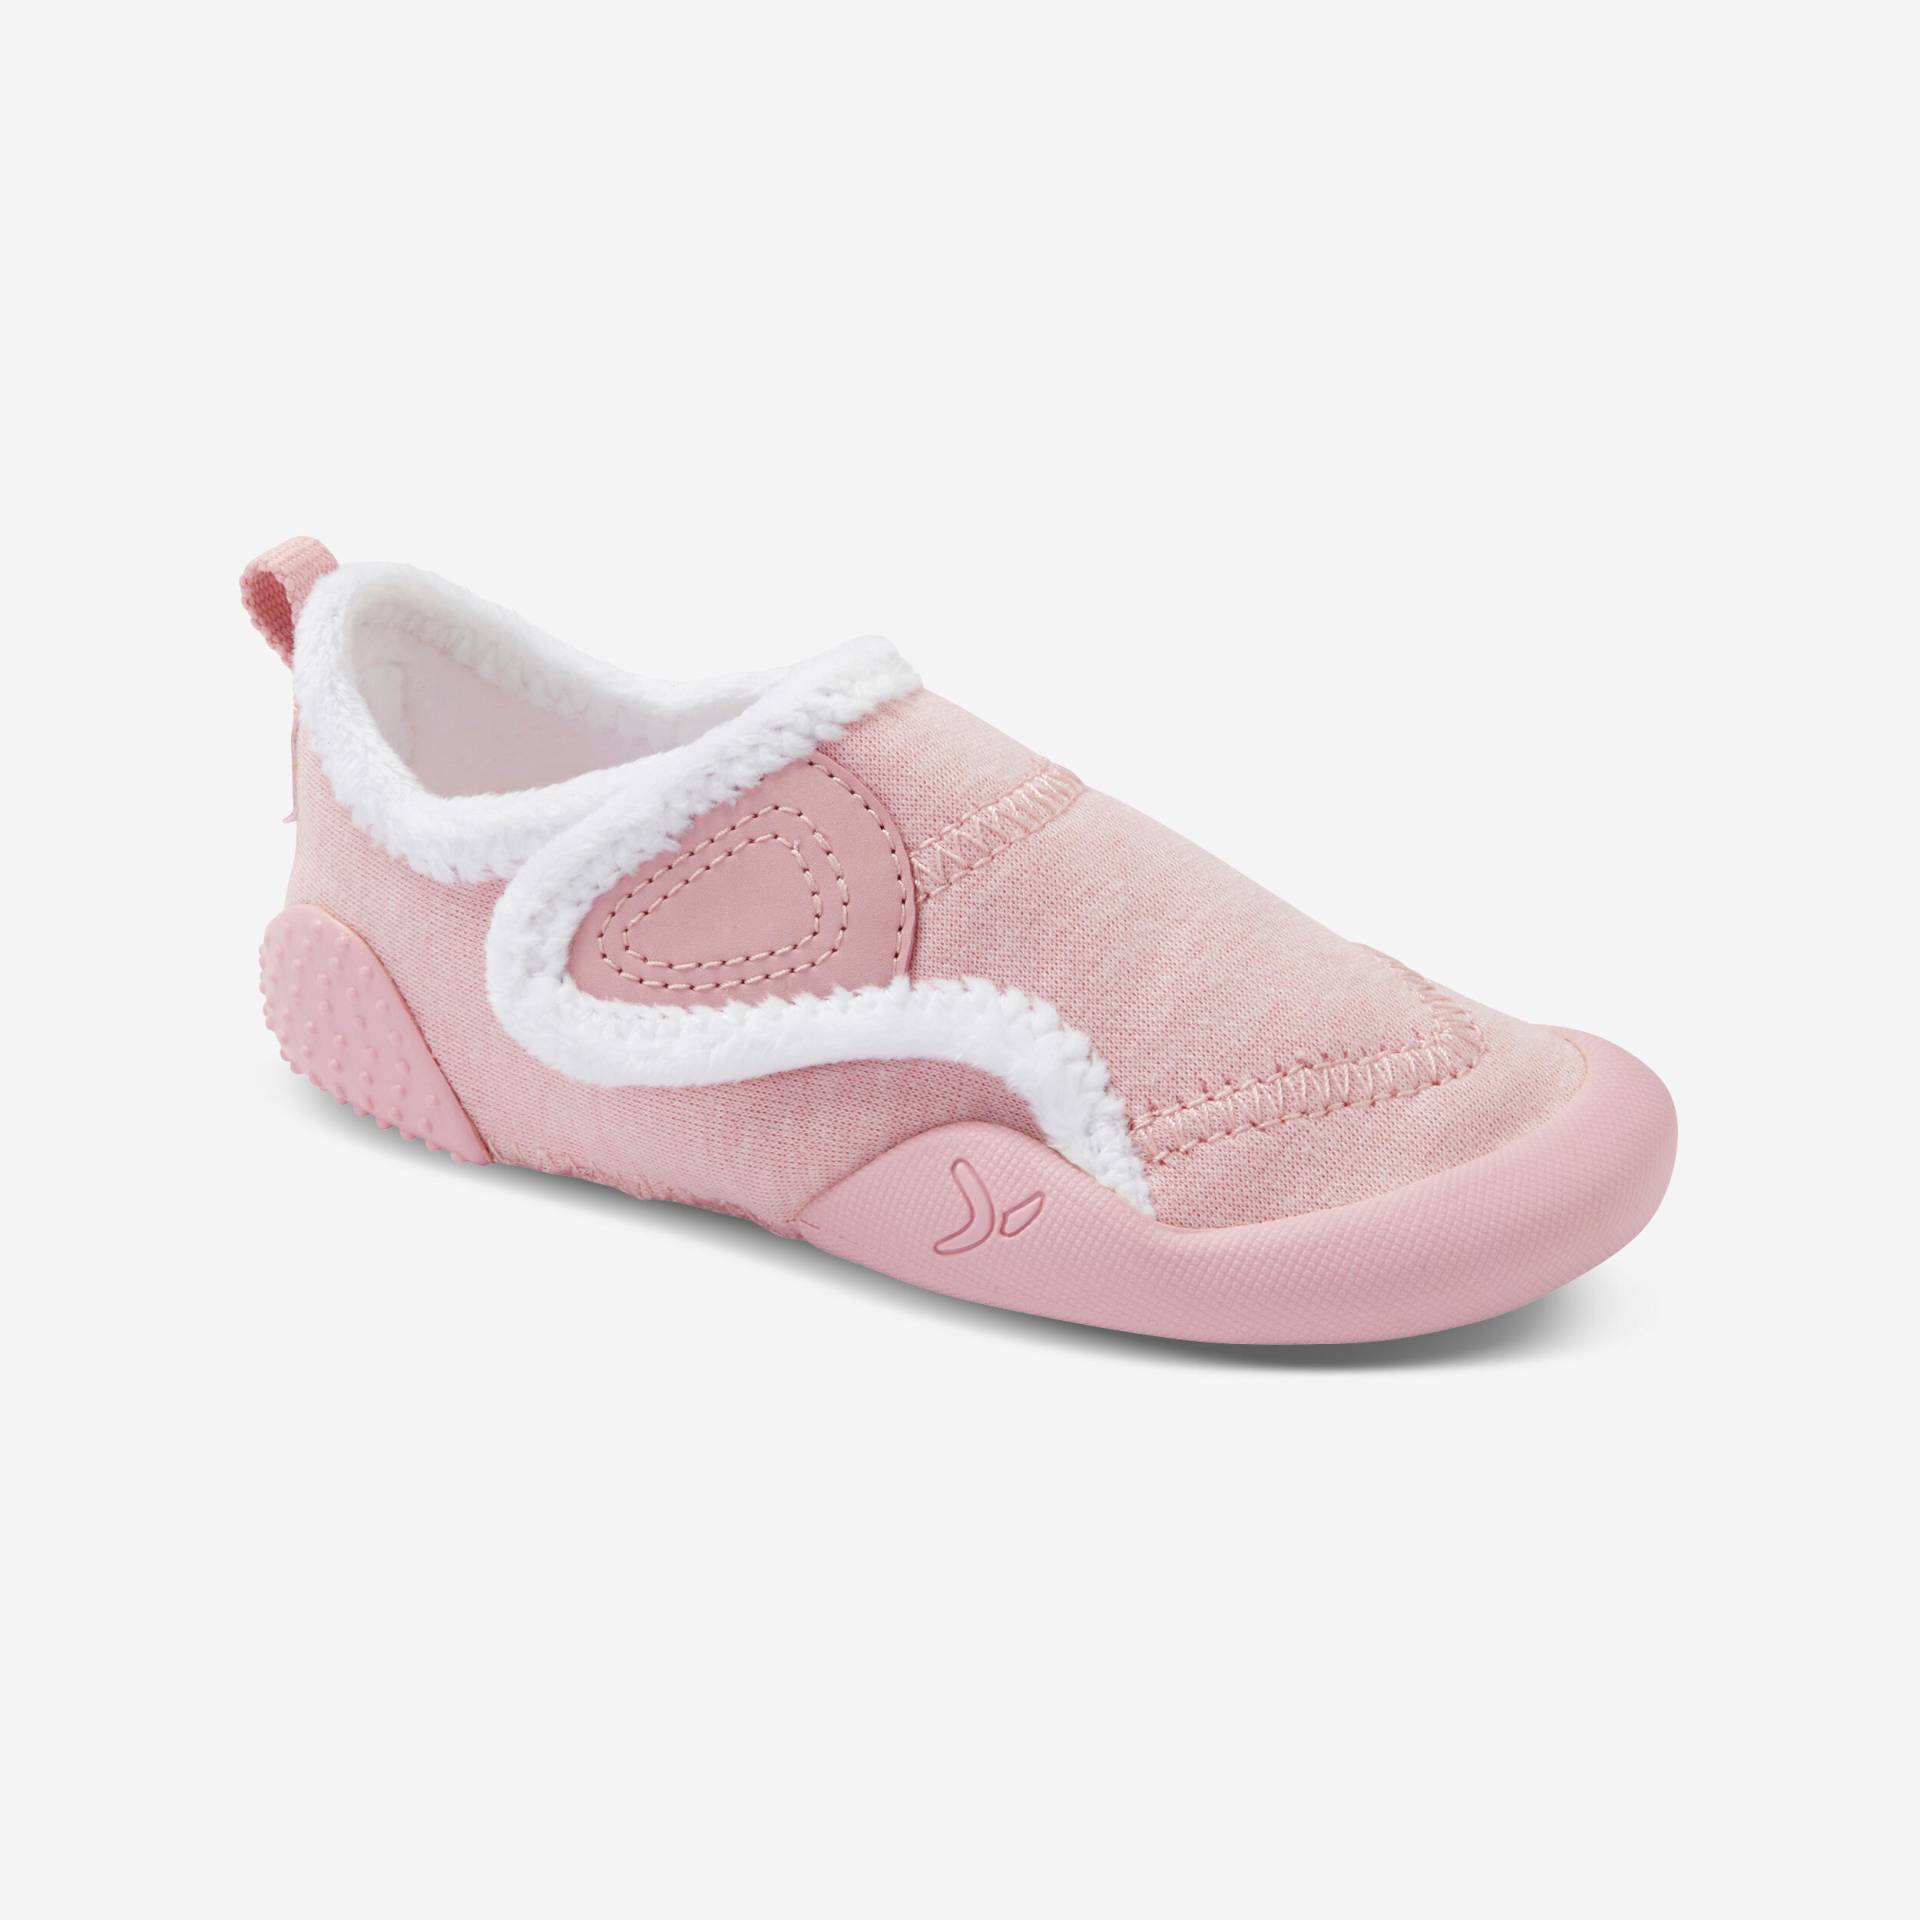 Turnschuhe/Hausschuhe Babylight 550 Comfort Babyturnen rosa von Decathlon